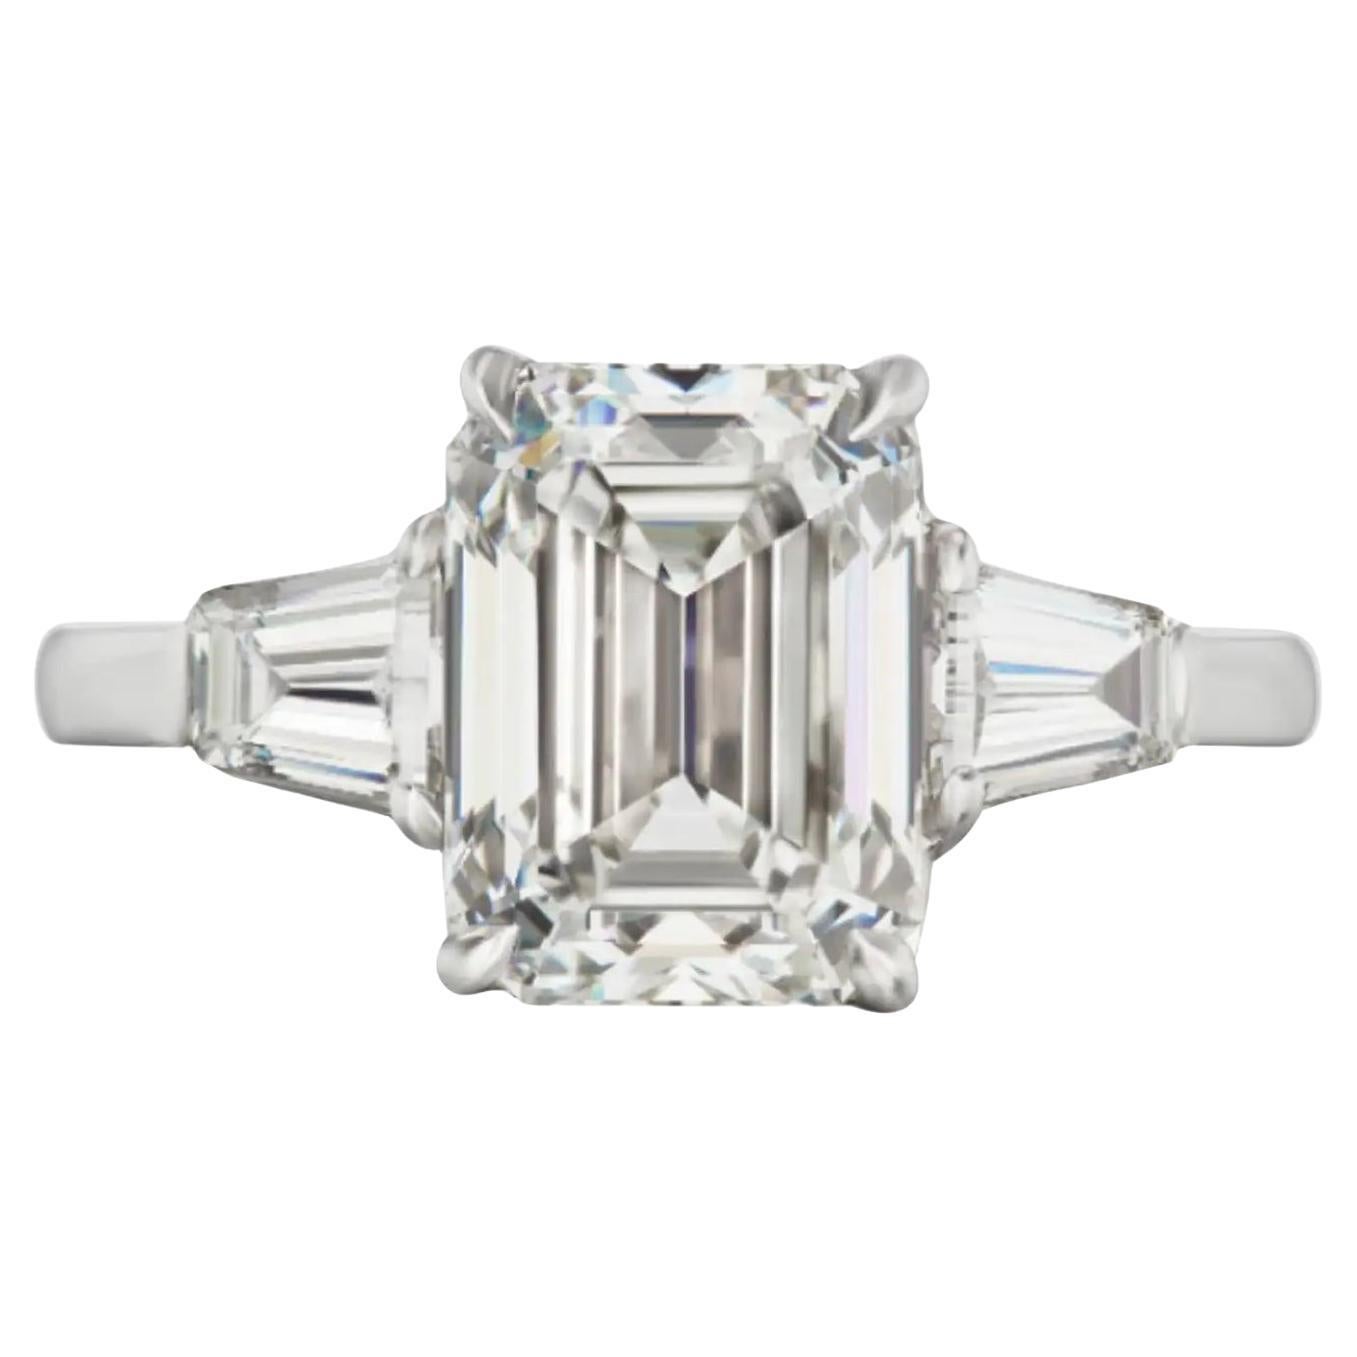 IGI ANTWERP 2.51 Carat Emerald Cut Diamond Ring 